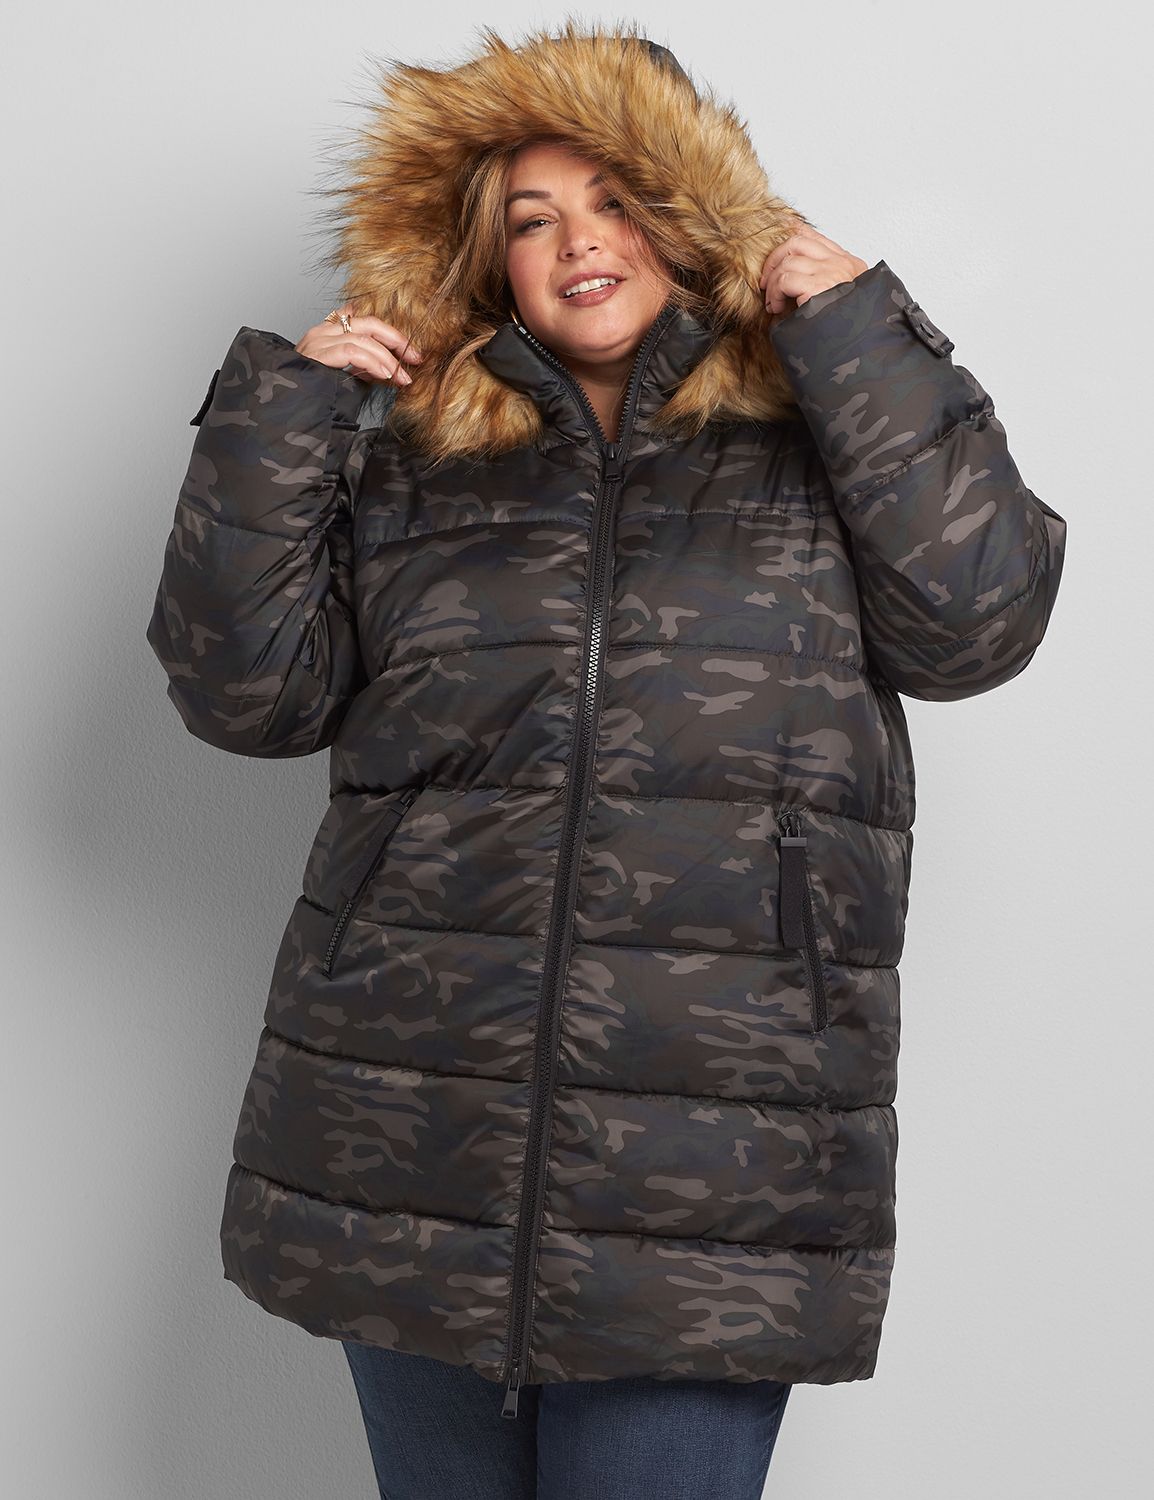 womens winter coats size 26